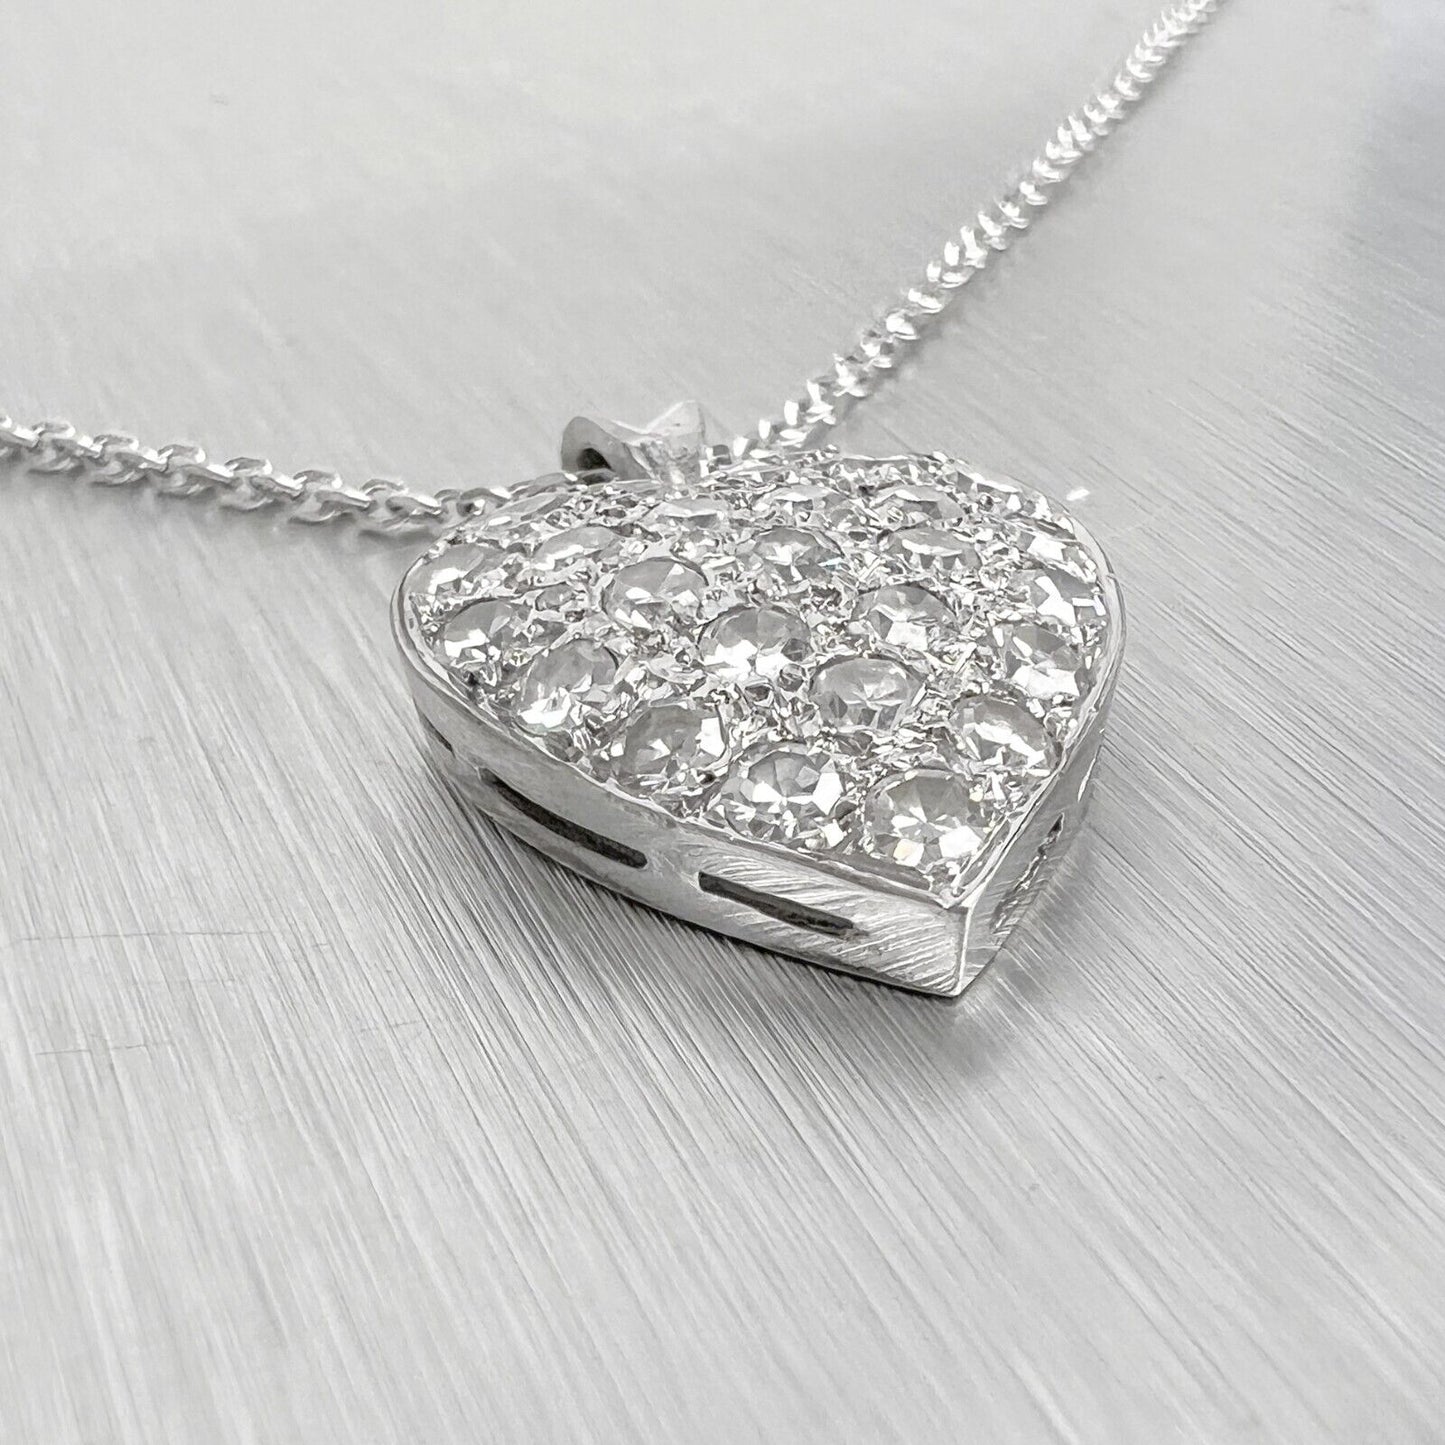 14k White Gold Single Cut Diamond Pave Heart Pendant Necklace 0.45ctw 16"